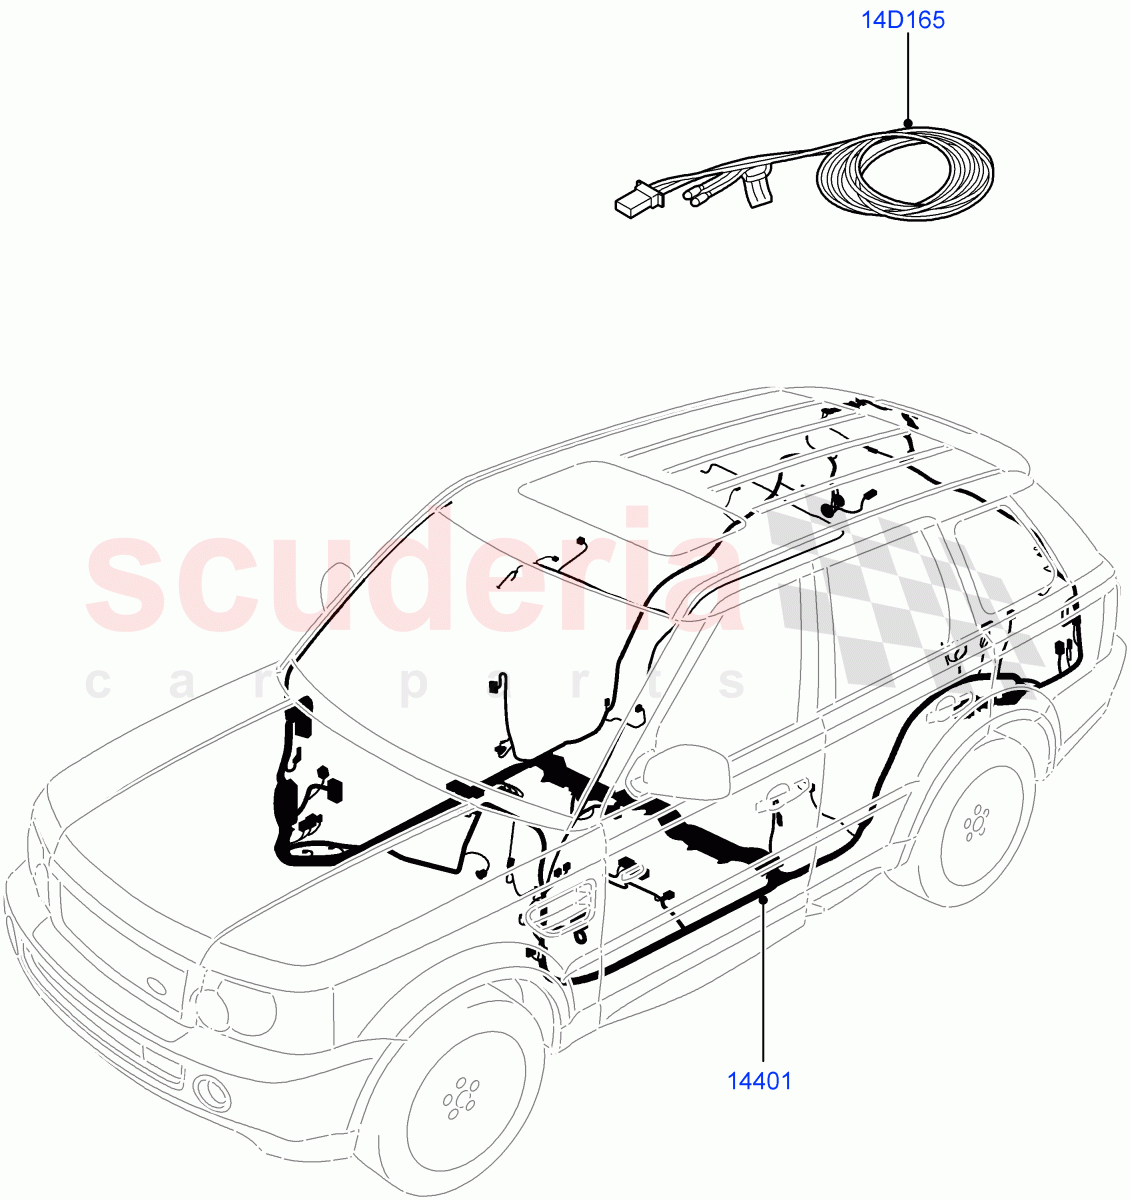 Electrical Wiring - Engine And Dash(Main Harness)((V)FROMBA000001,(V)TOBA999999) of Land Rover Land Rover Range Rover Sport (2010-2013) [3.6 V8 32V DOHC EFI Diesel]